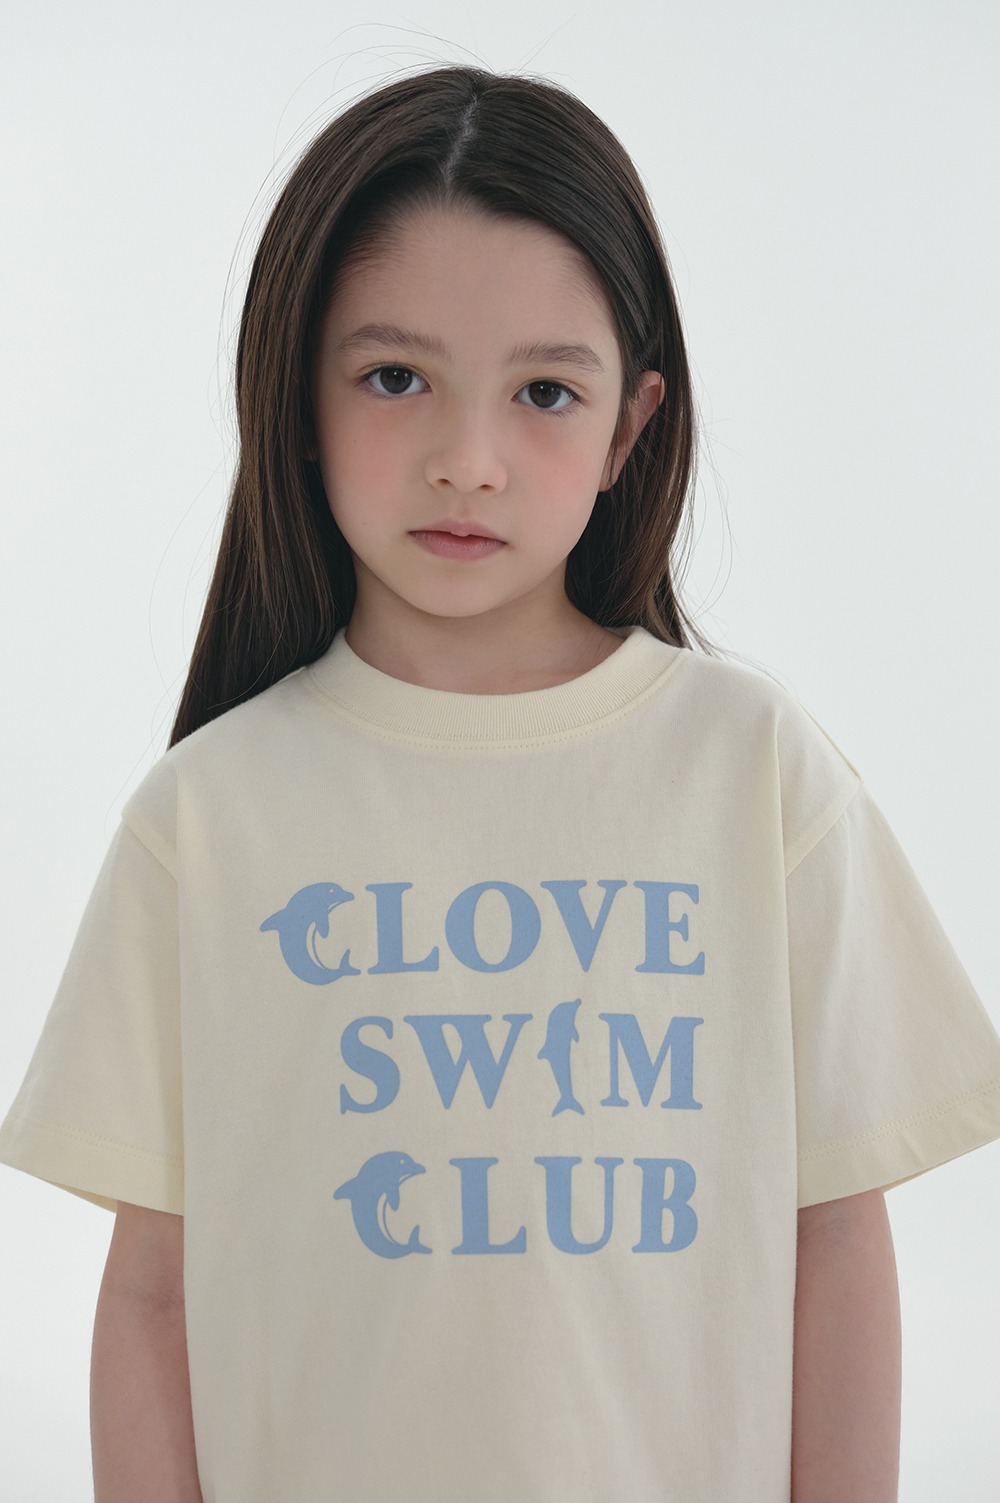 clove - [24SS clove] Swim Club T-shirt_Kids (Cream)